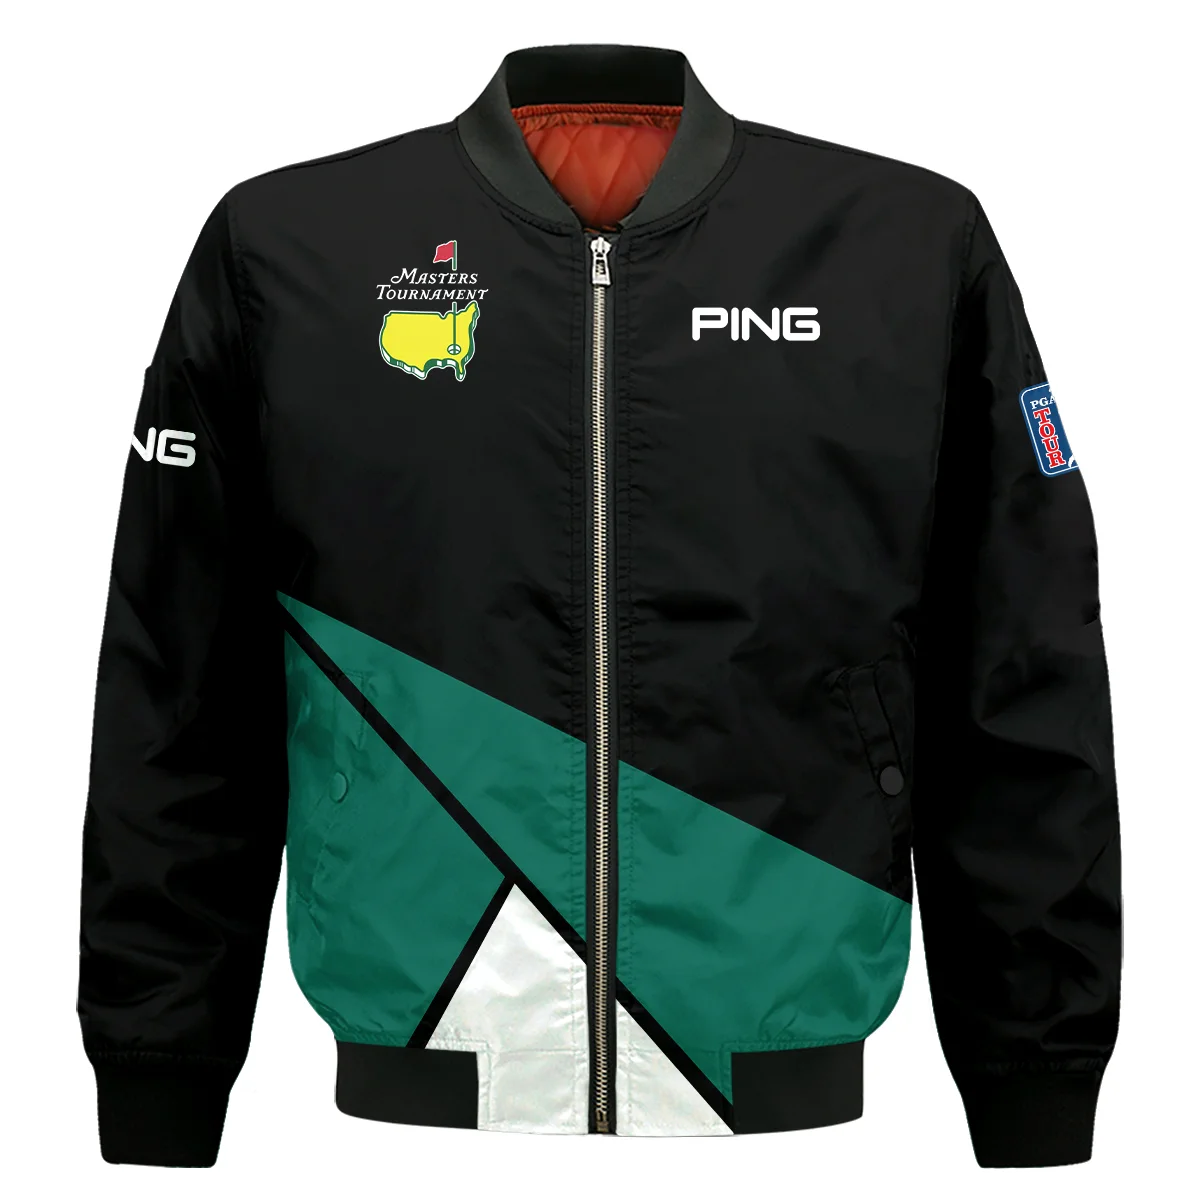 Golf Masters Tournament Ping Zipper Hoodie Shirt Black And Green Golf Sports All Over Print Zipper Hoodie Shirt